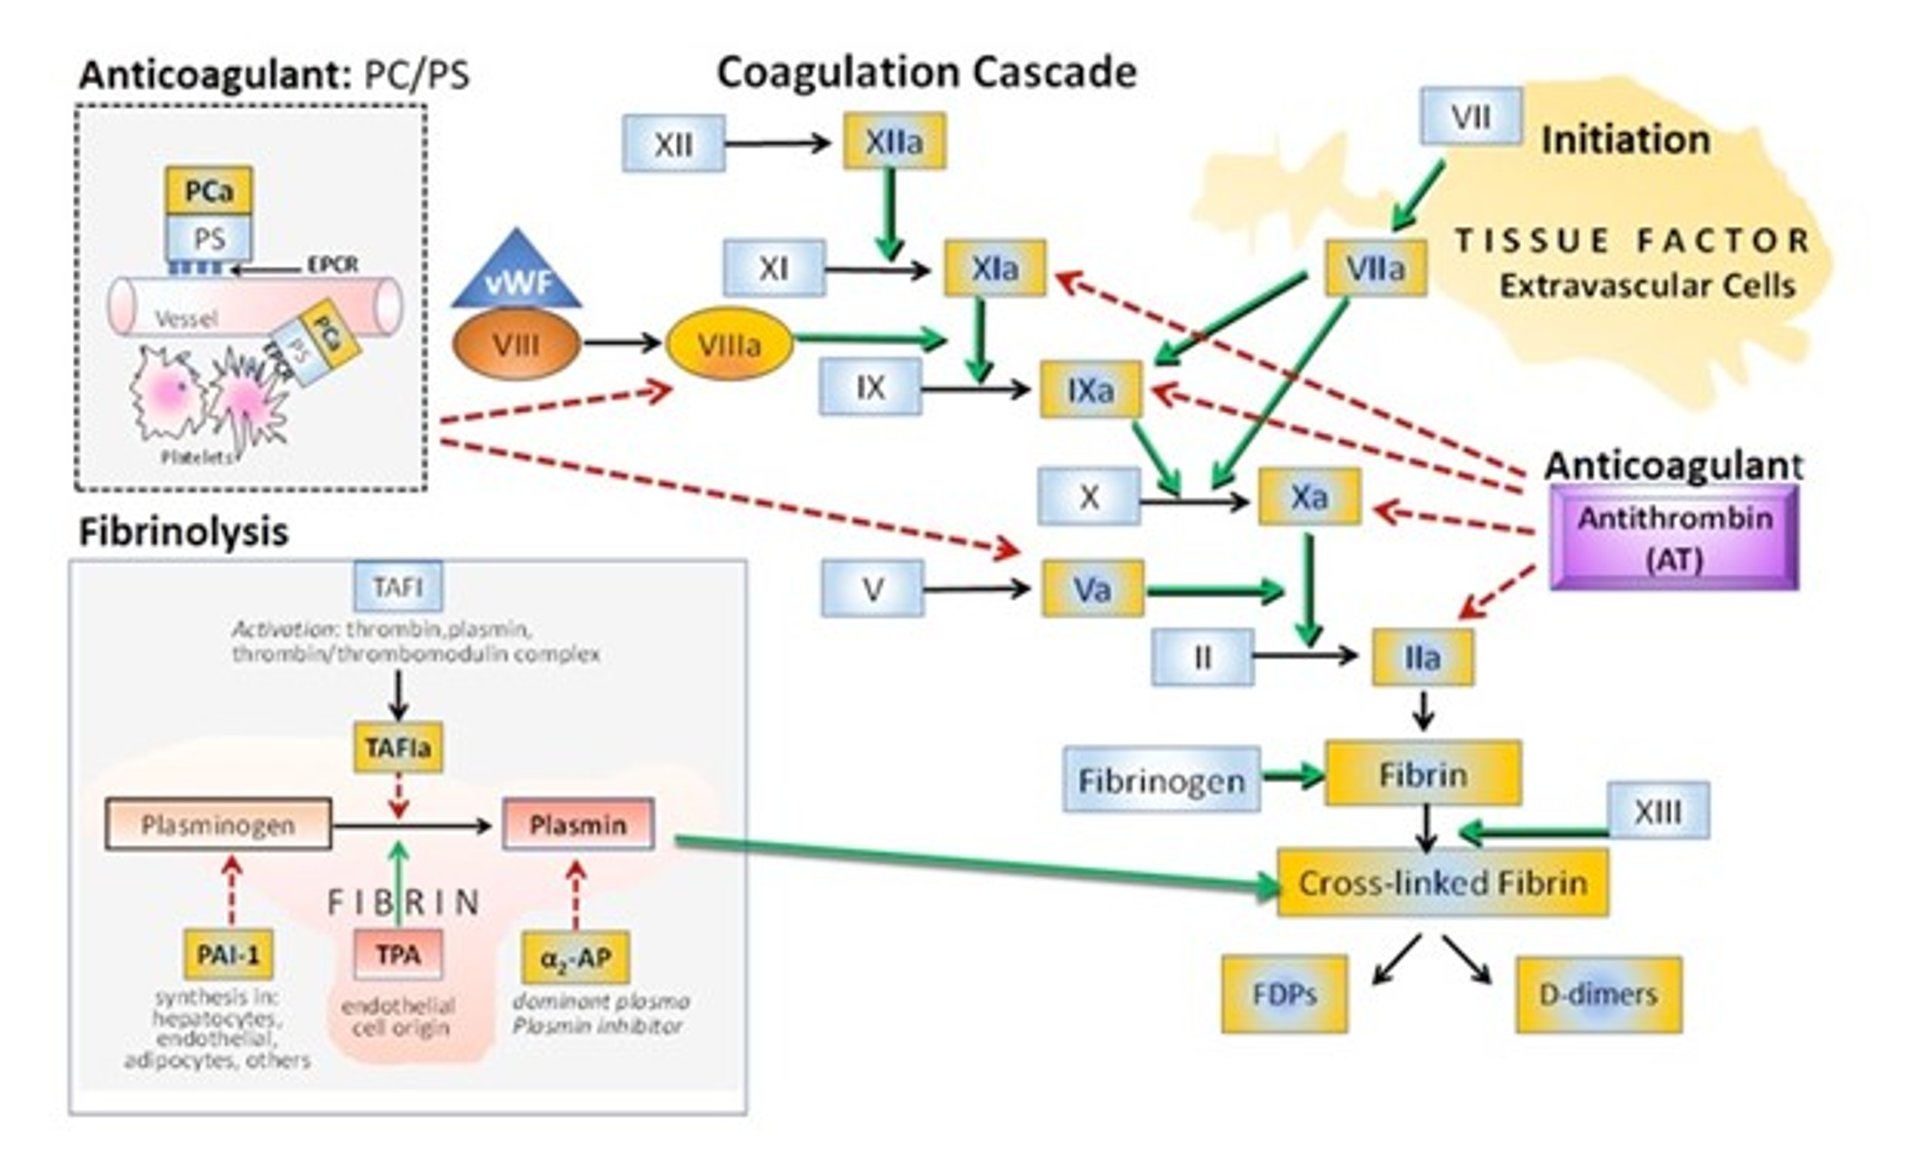 Major modulatory interactions of coagulation inhibitors and fibrinolysis with the coagulation cascade